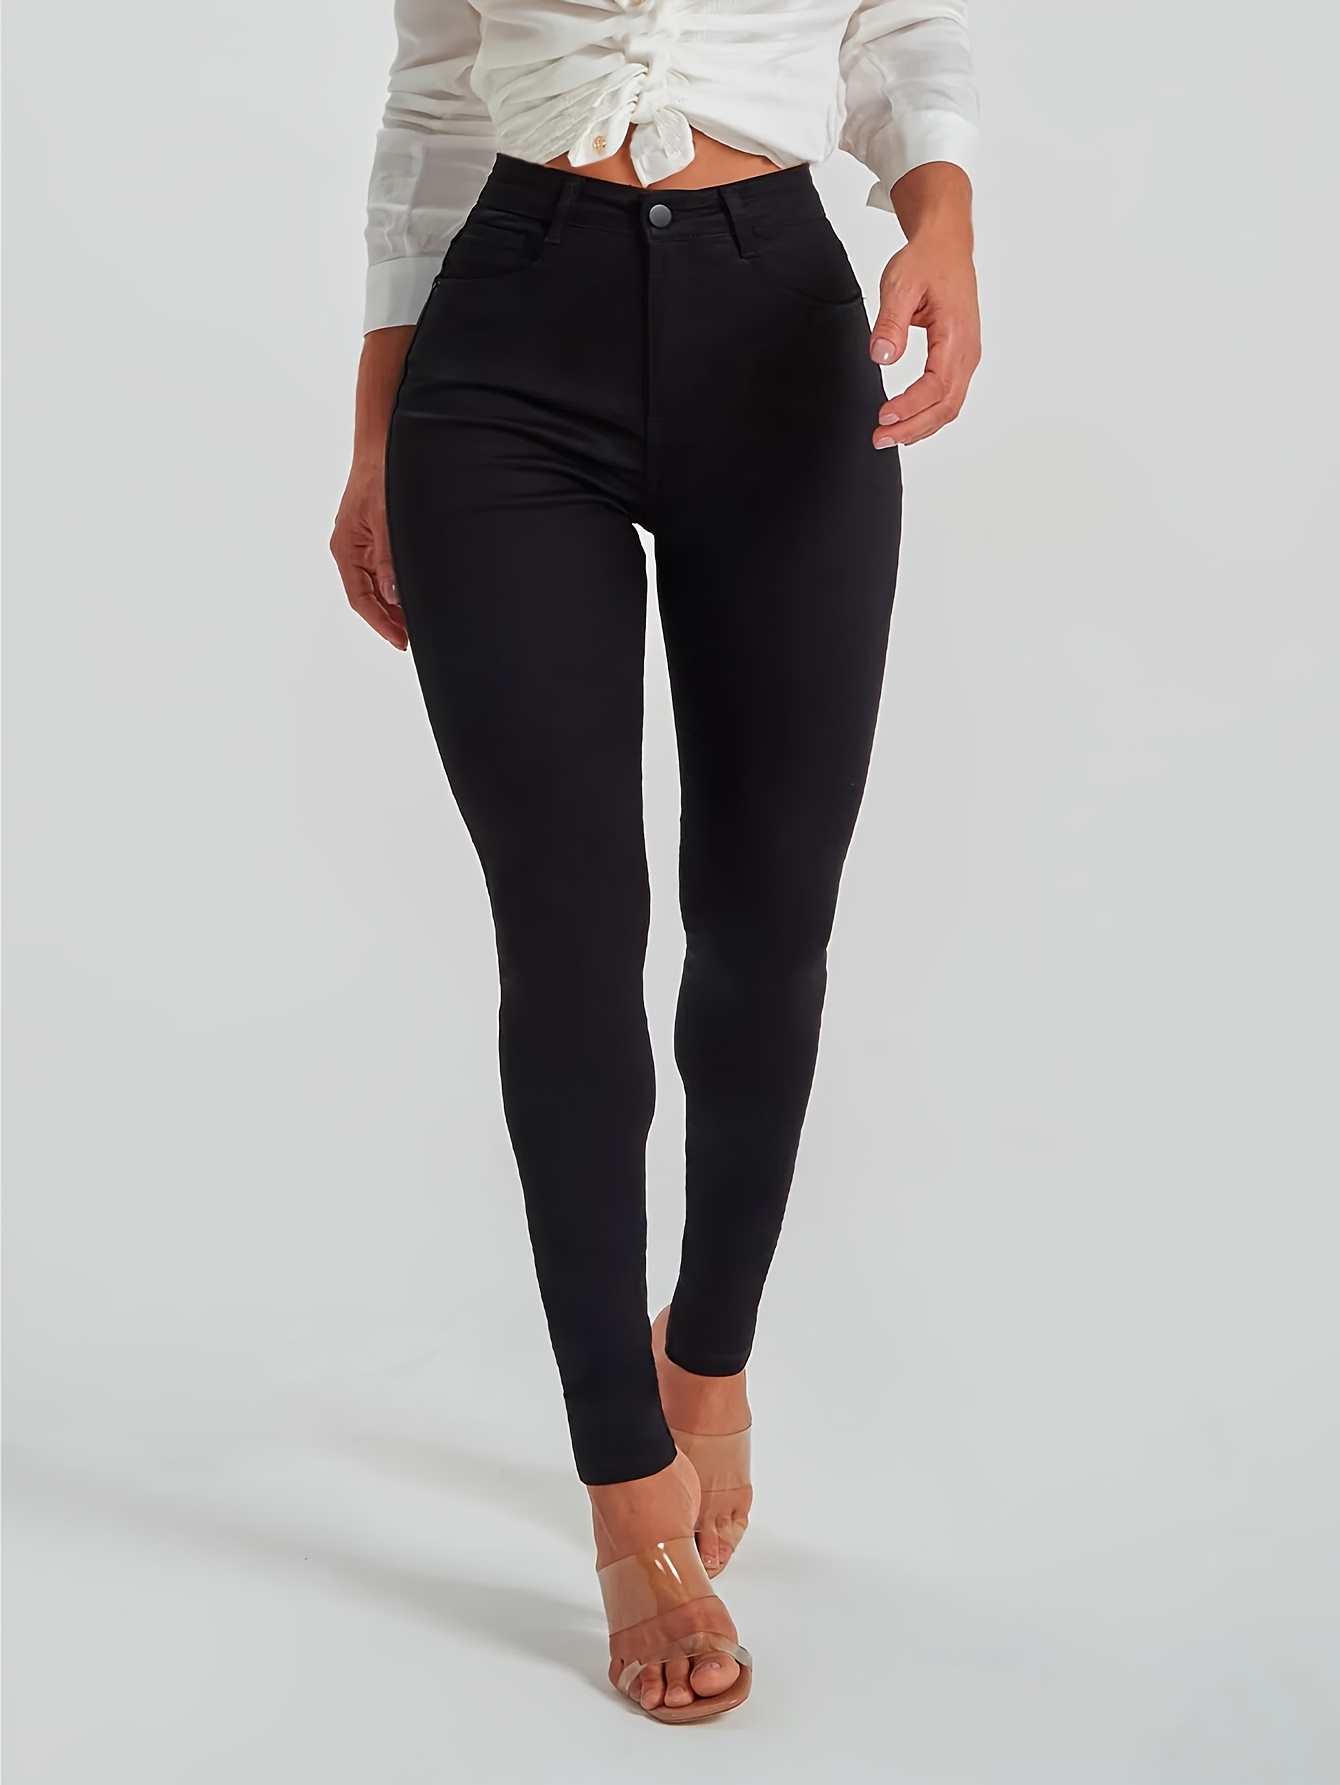 Pantalones Negros para Mujer - Compra Online Pantalones Negros para Mujer  en